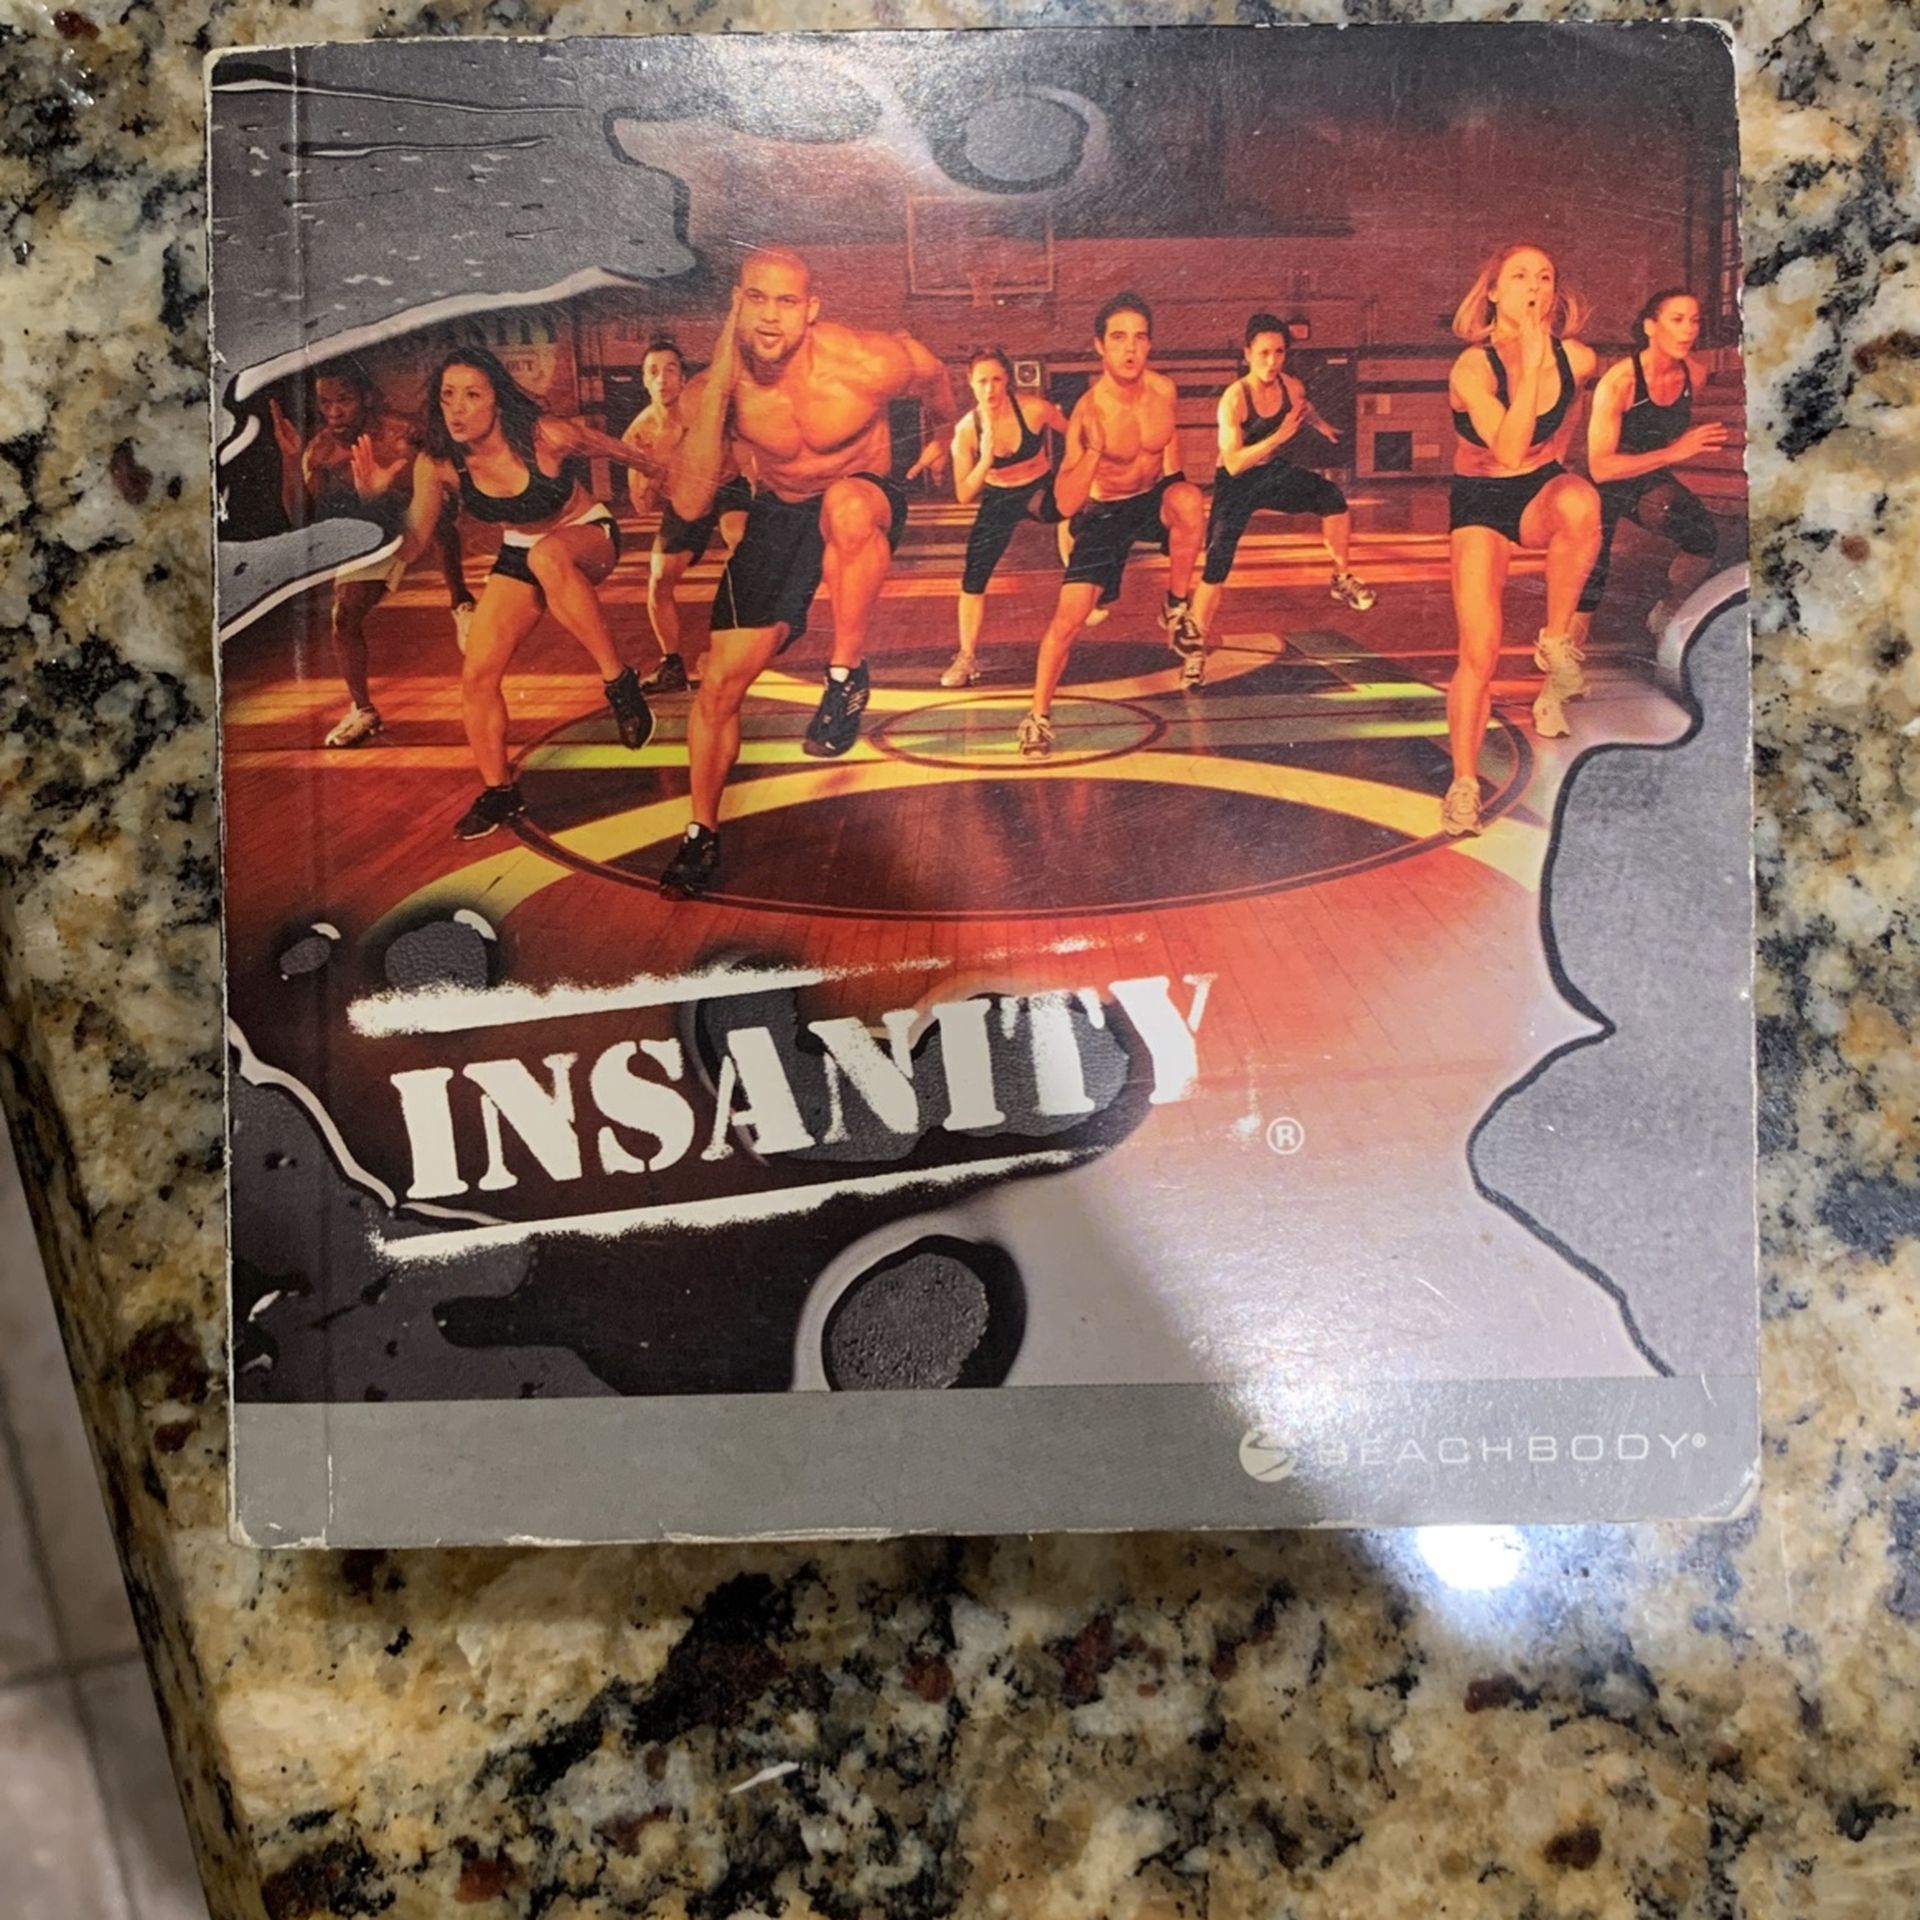 Insanity Beach body DVD